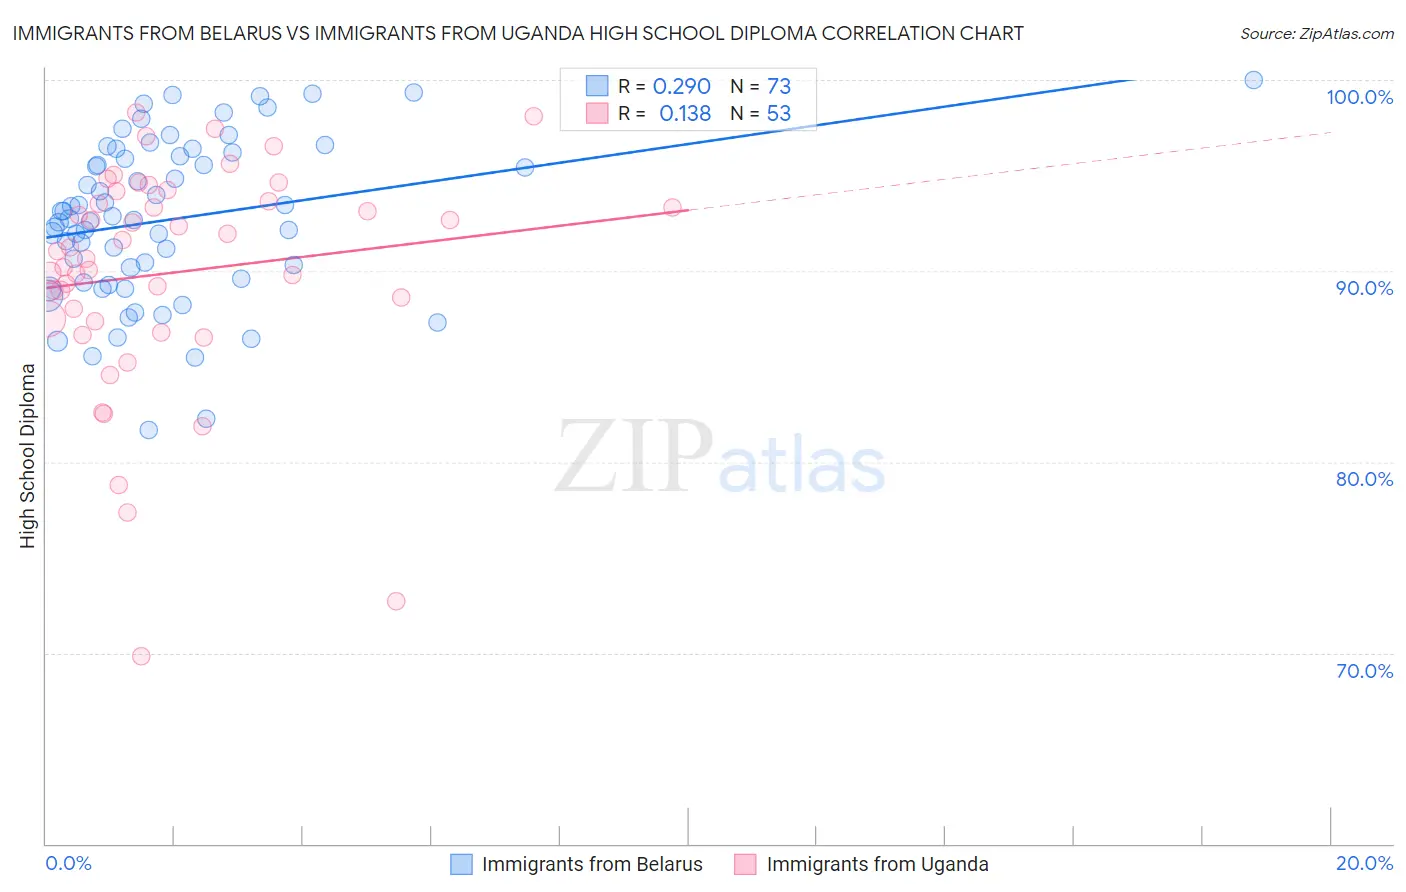 Immigrants from Belarus vs Immigrants from Uganda High School Diploma